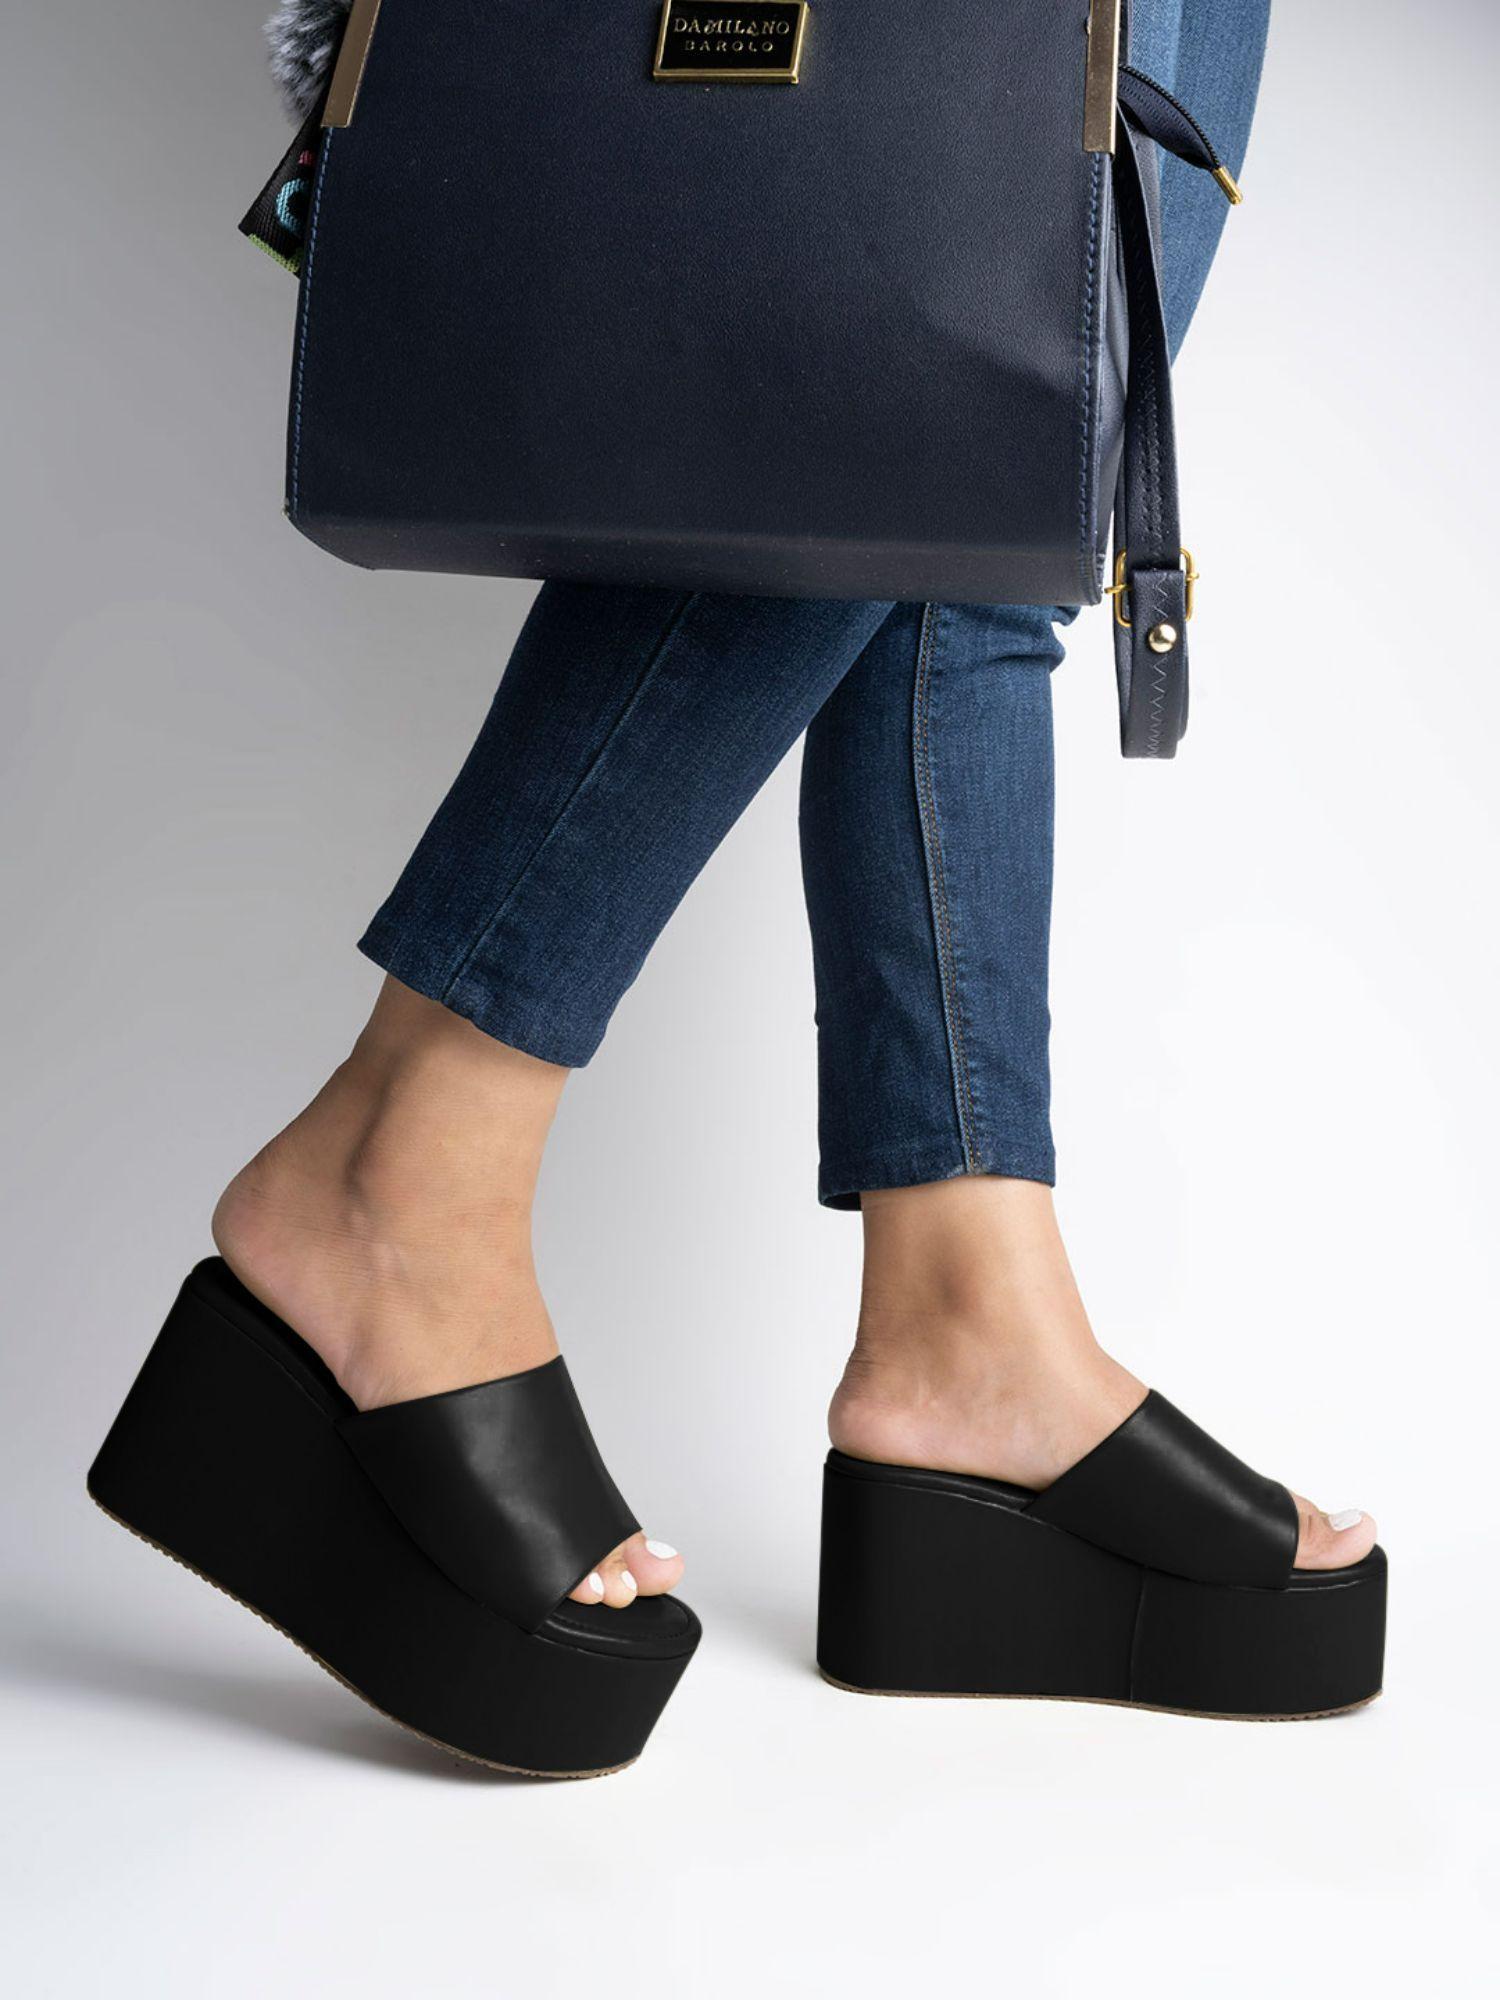 fashionable-solid-black-wedge-heels